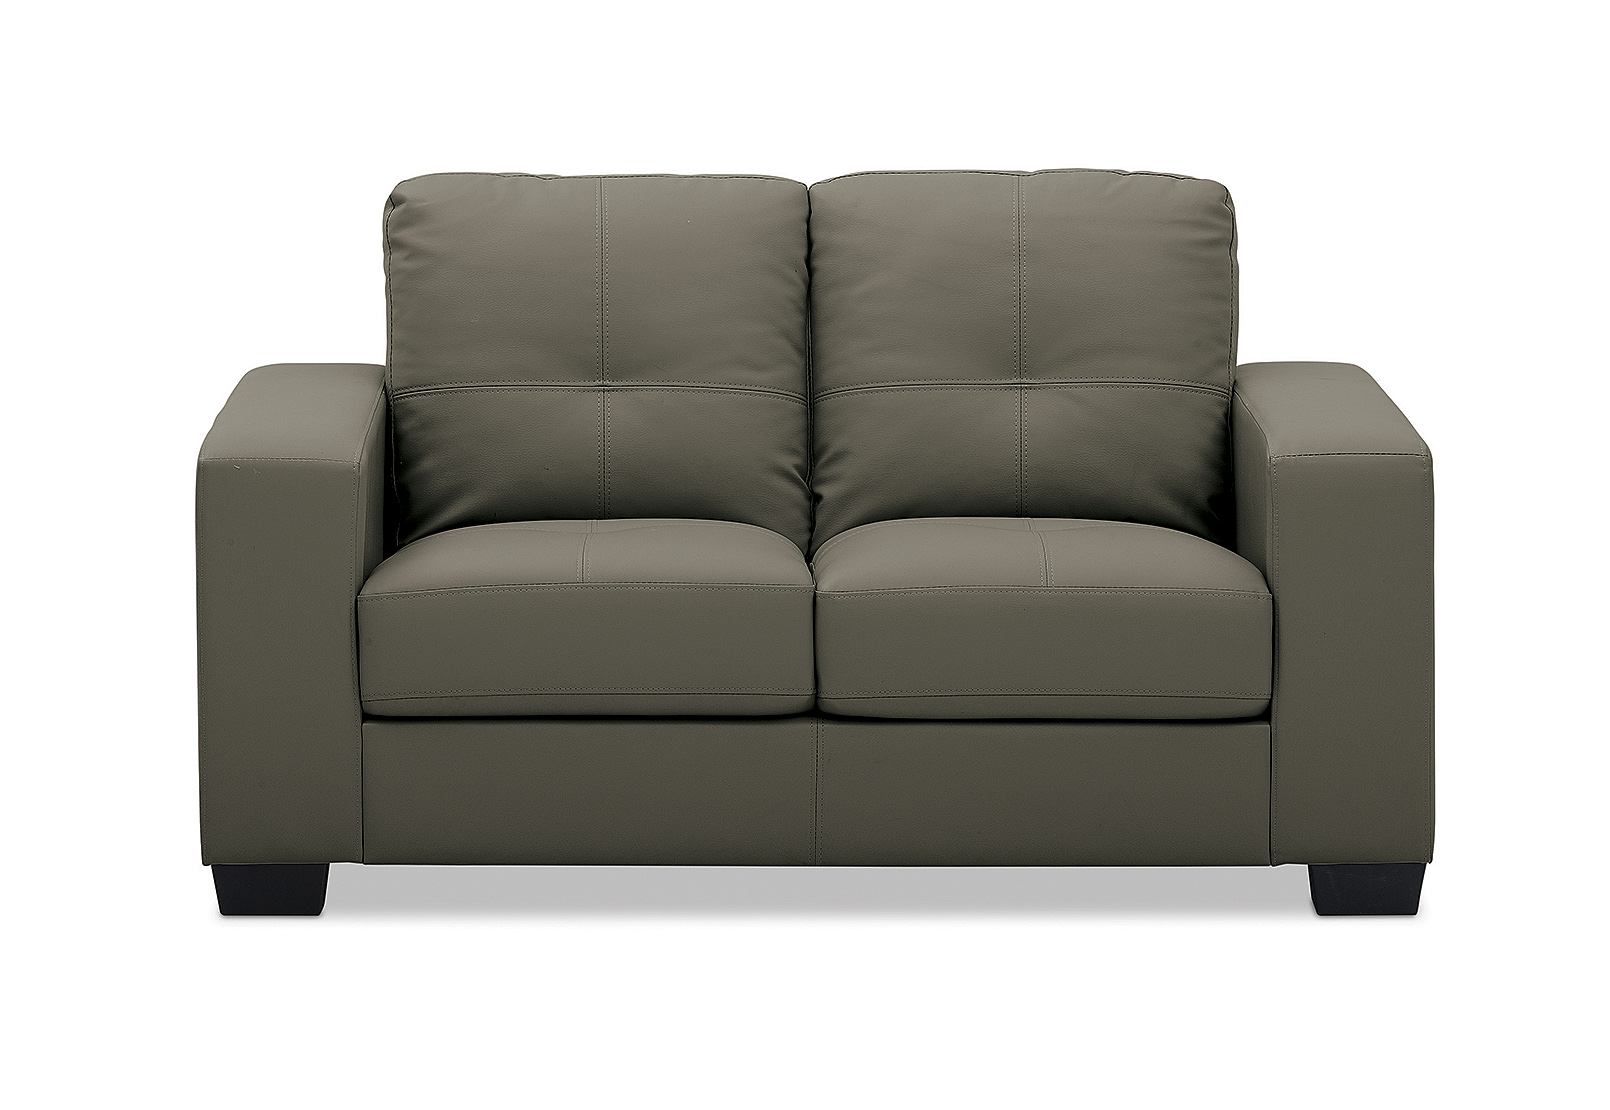 CHARCOAL DIAMOND Leather-Look 2 Seater Sofa | Amart Furniture